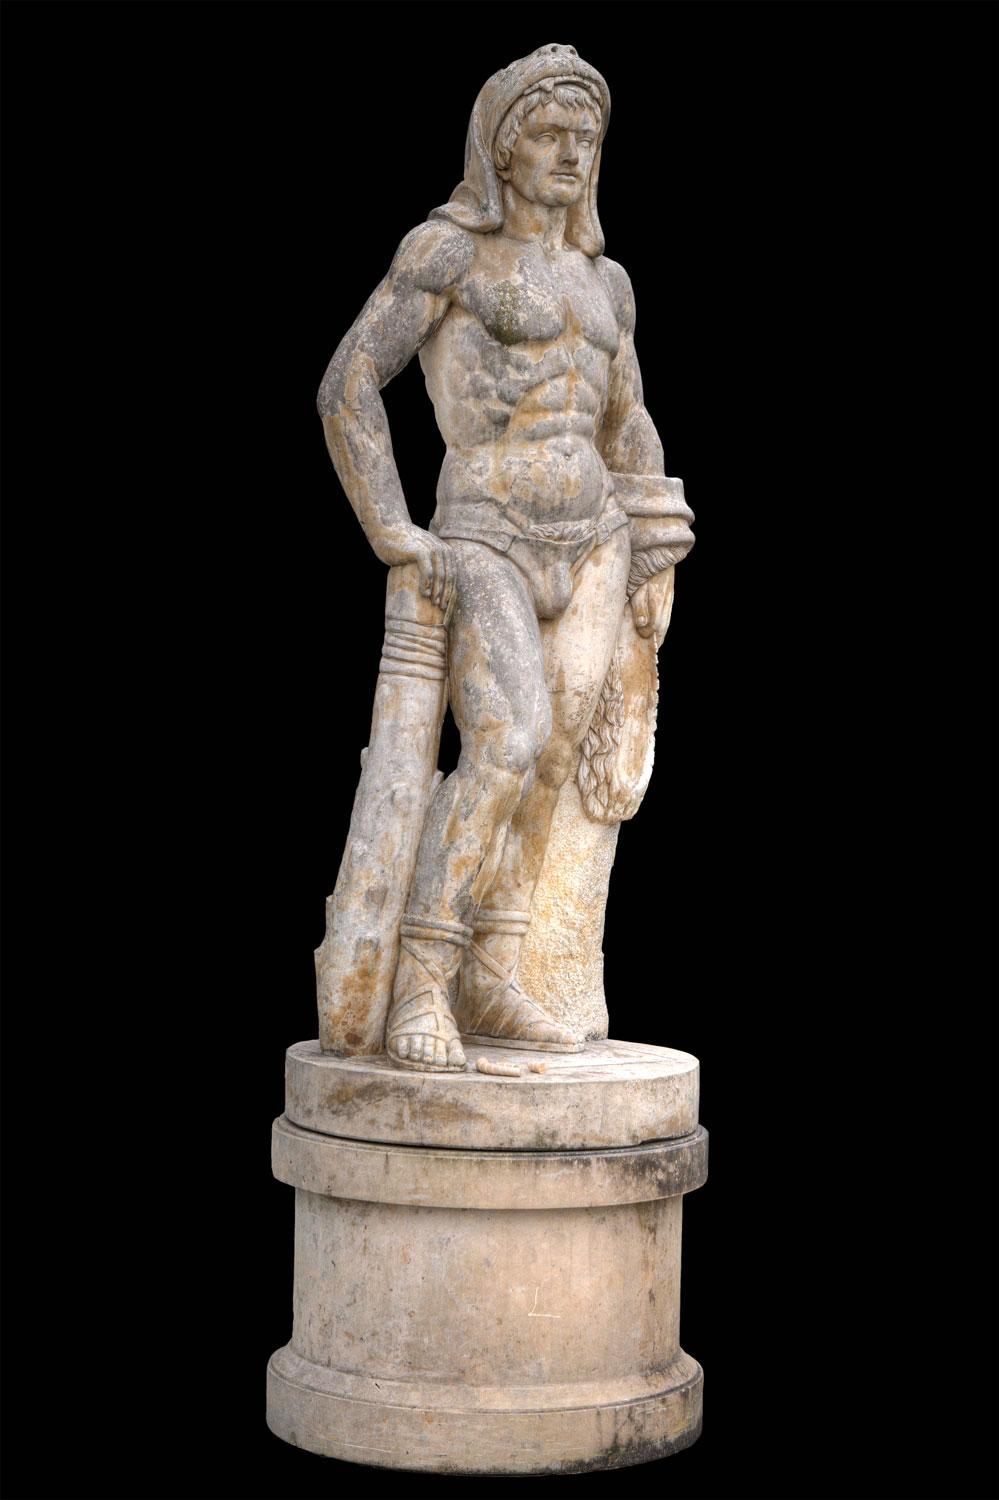  Figuratif figuratif italien en marbre monumental de style rationaliste  Sculptures de nus en vente 2